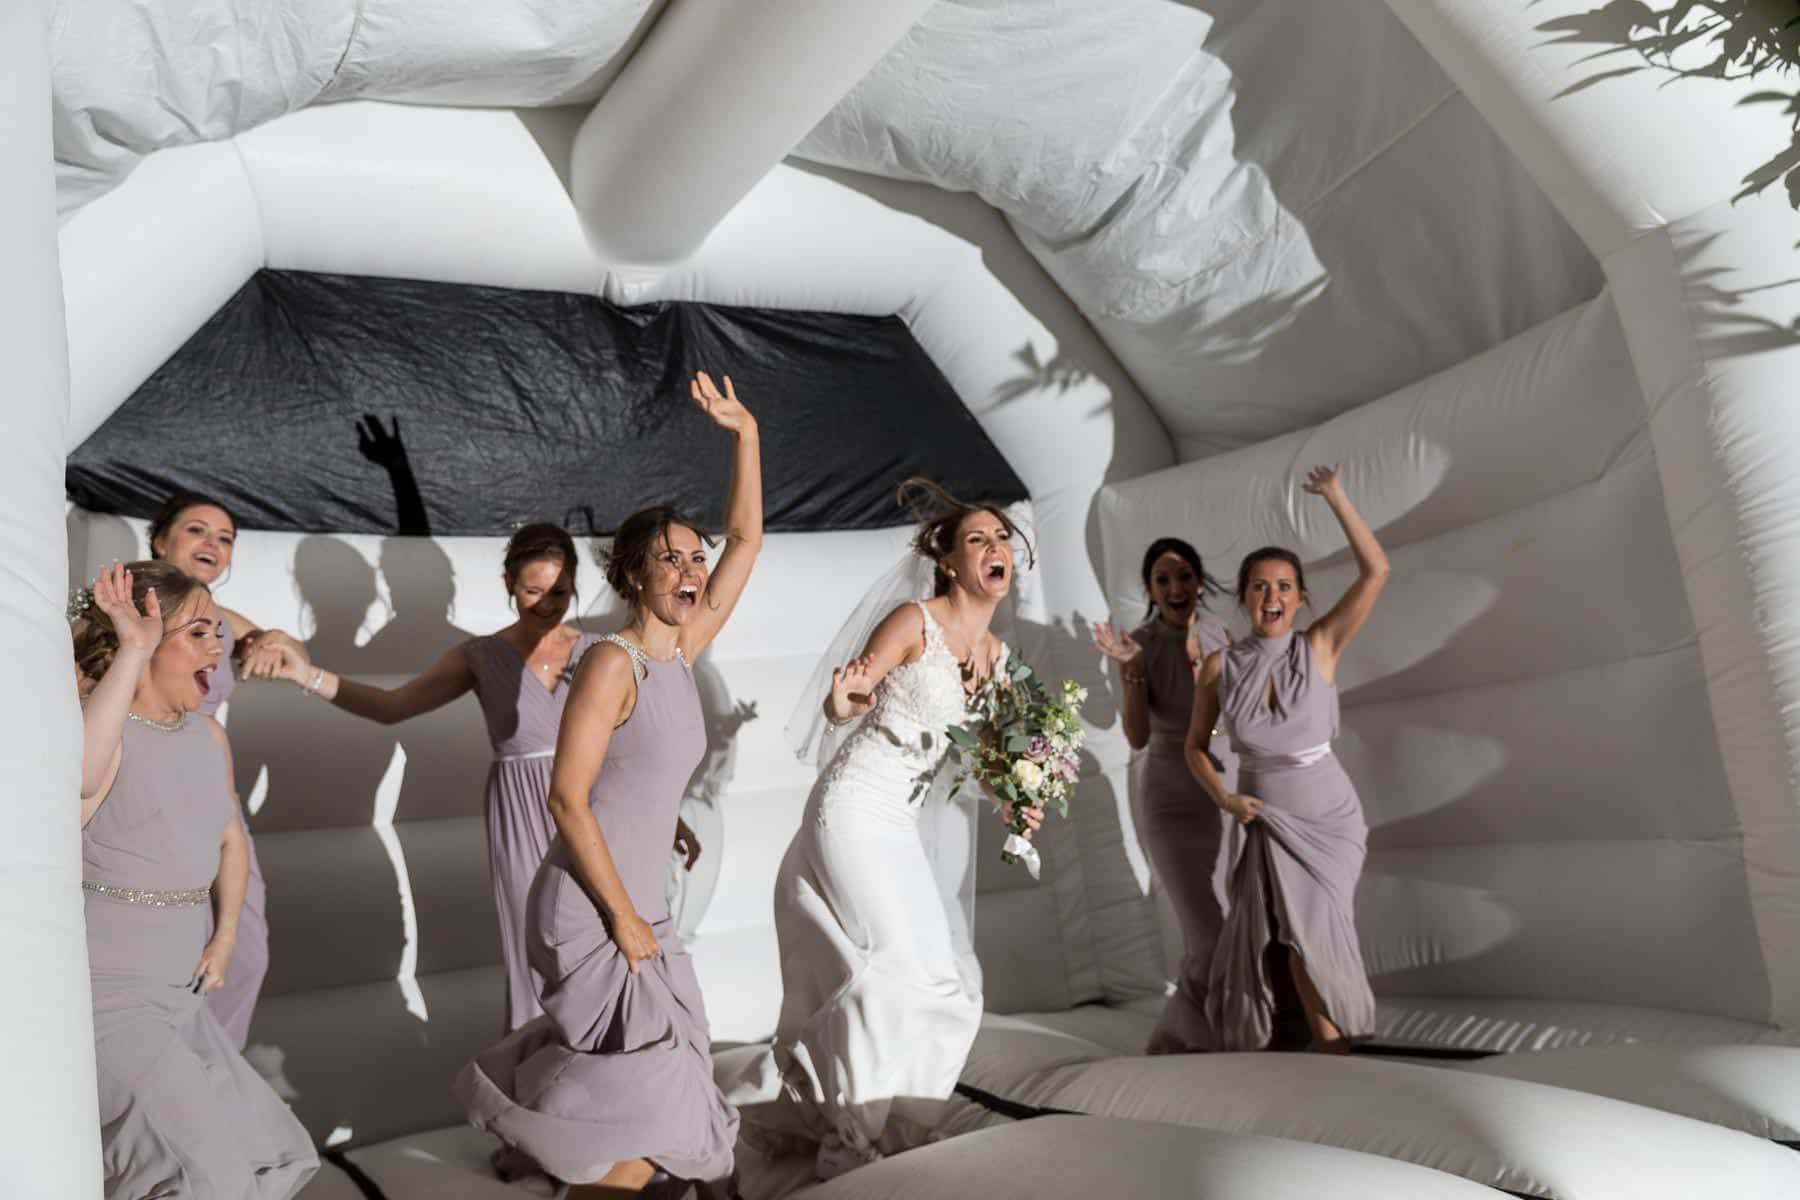 Bride Squad bouncing on a wedding bouncy castle